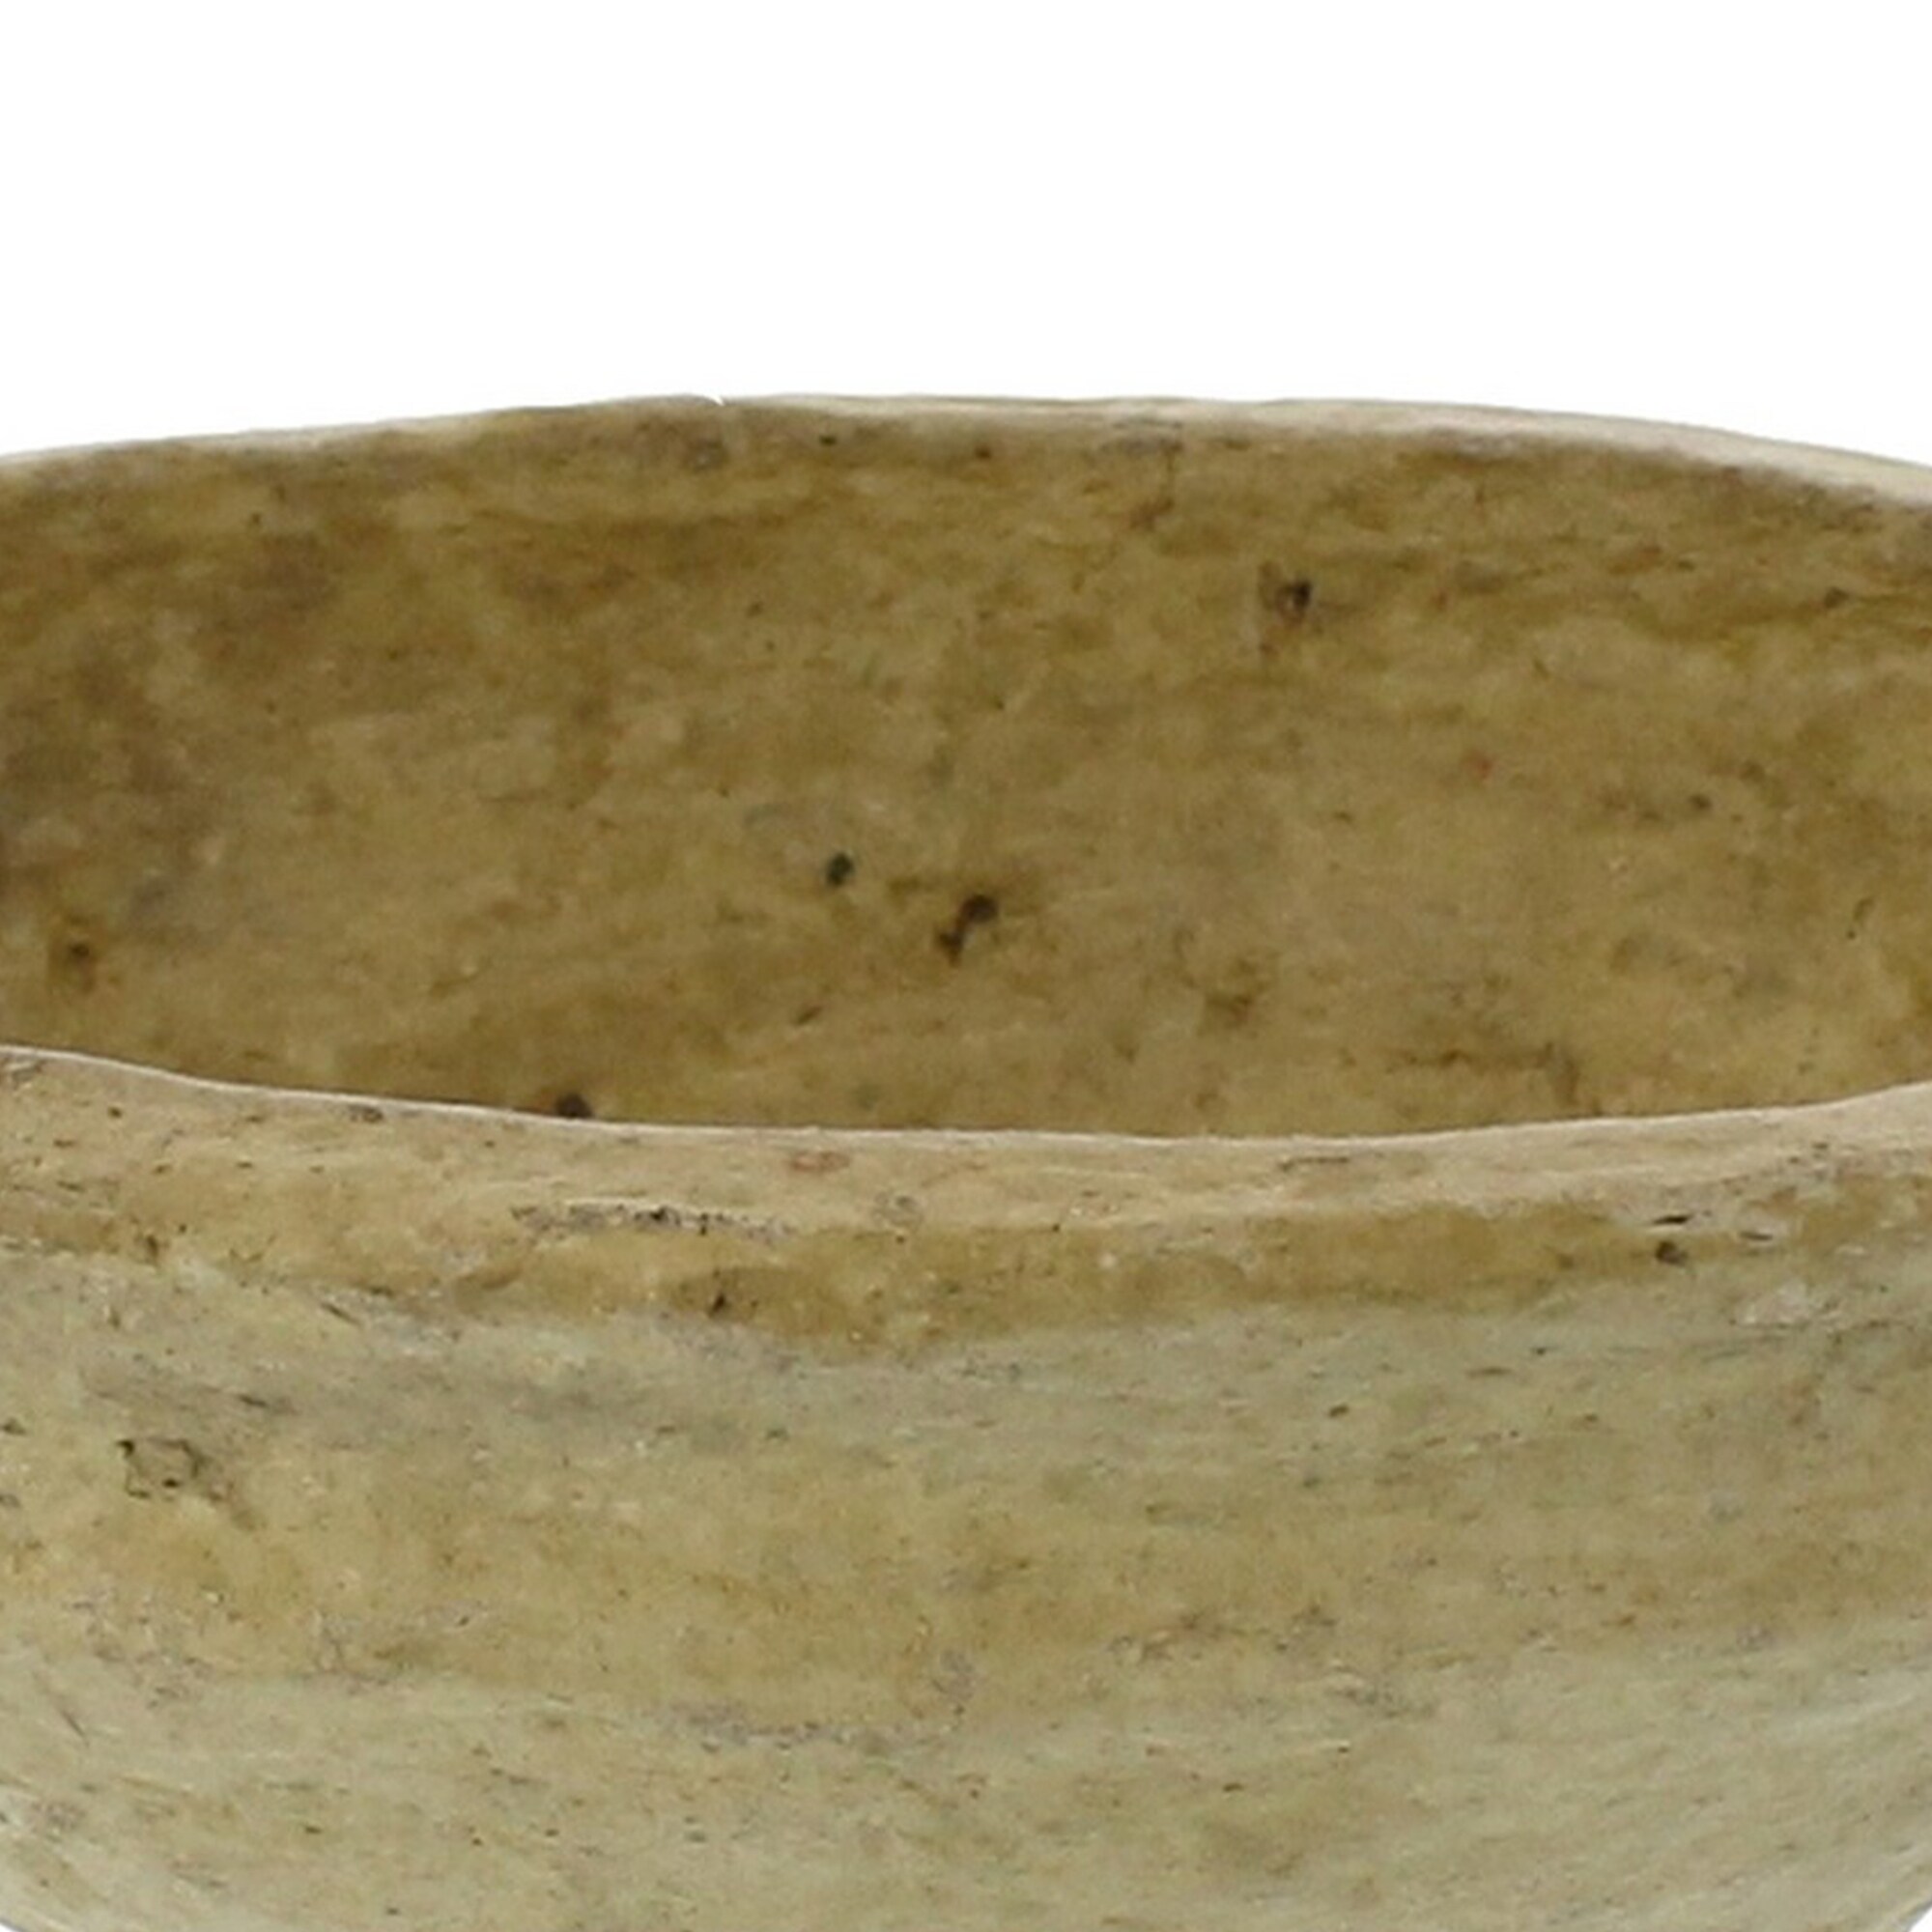 Paper Mache Bowl Set